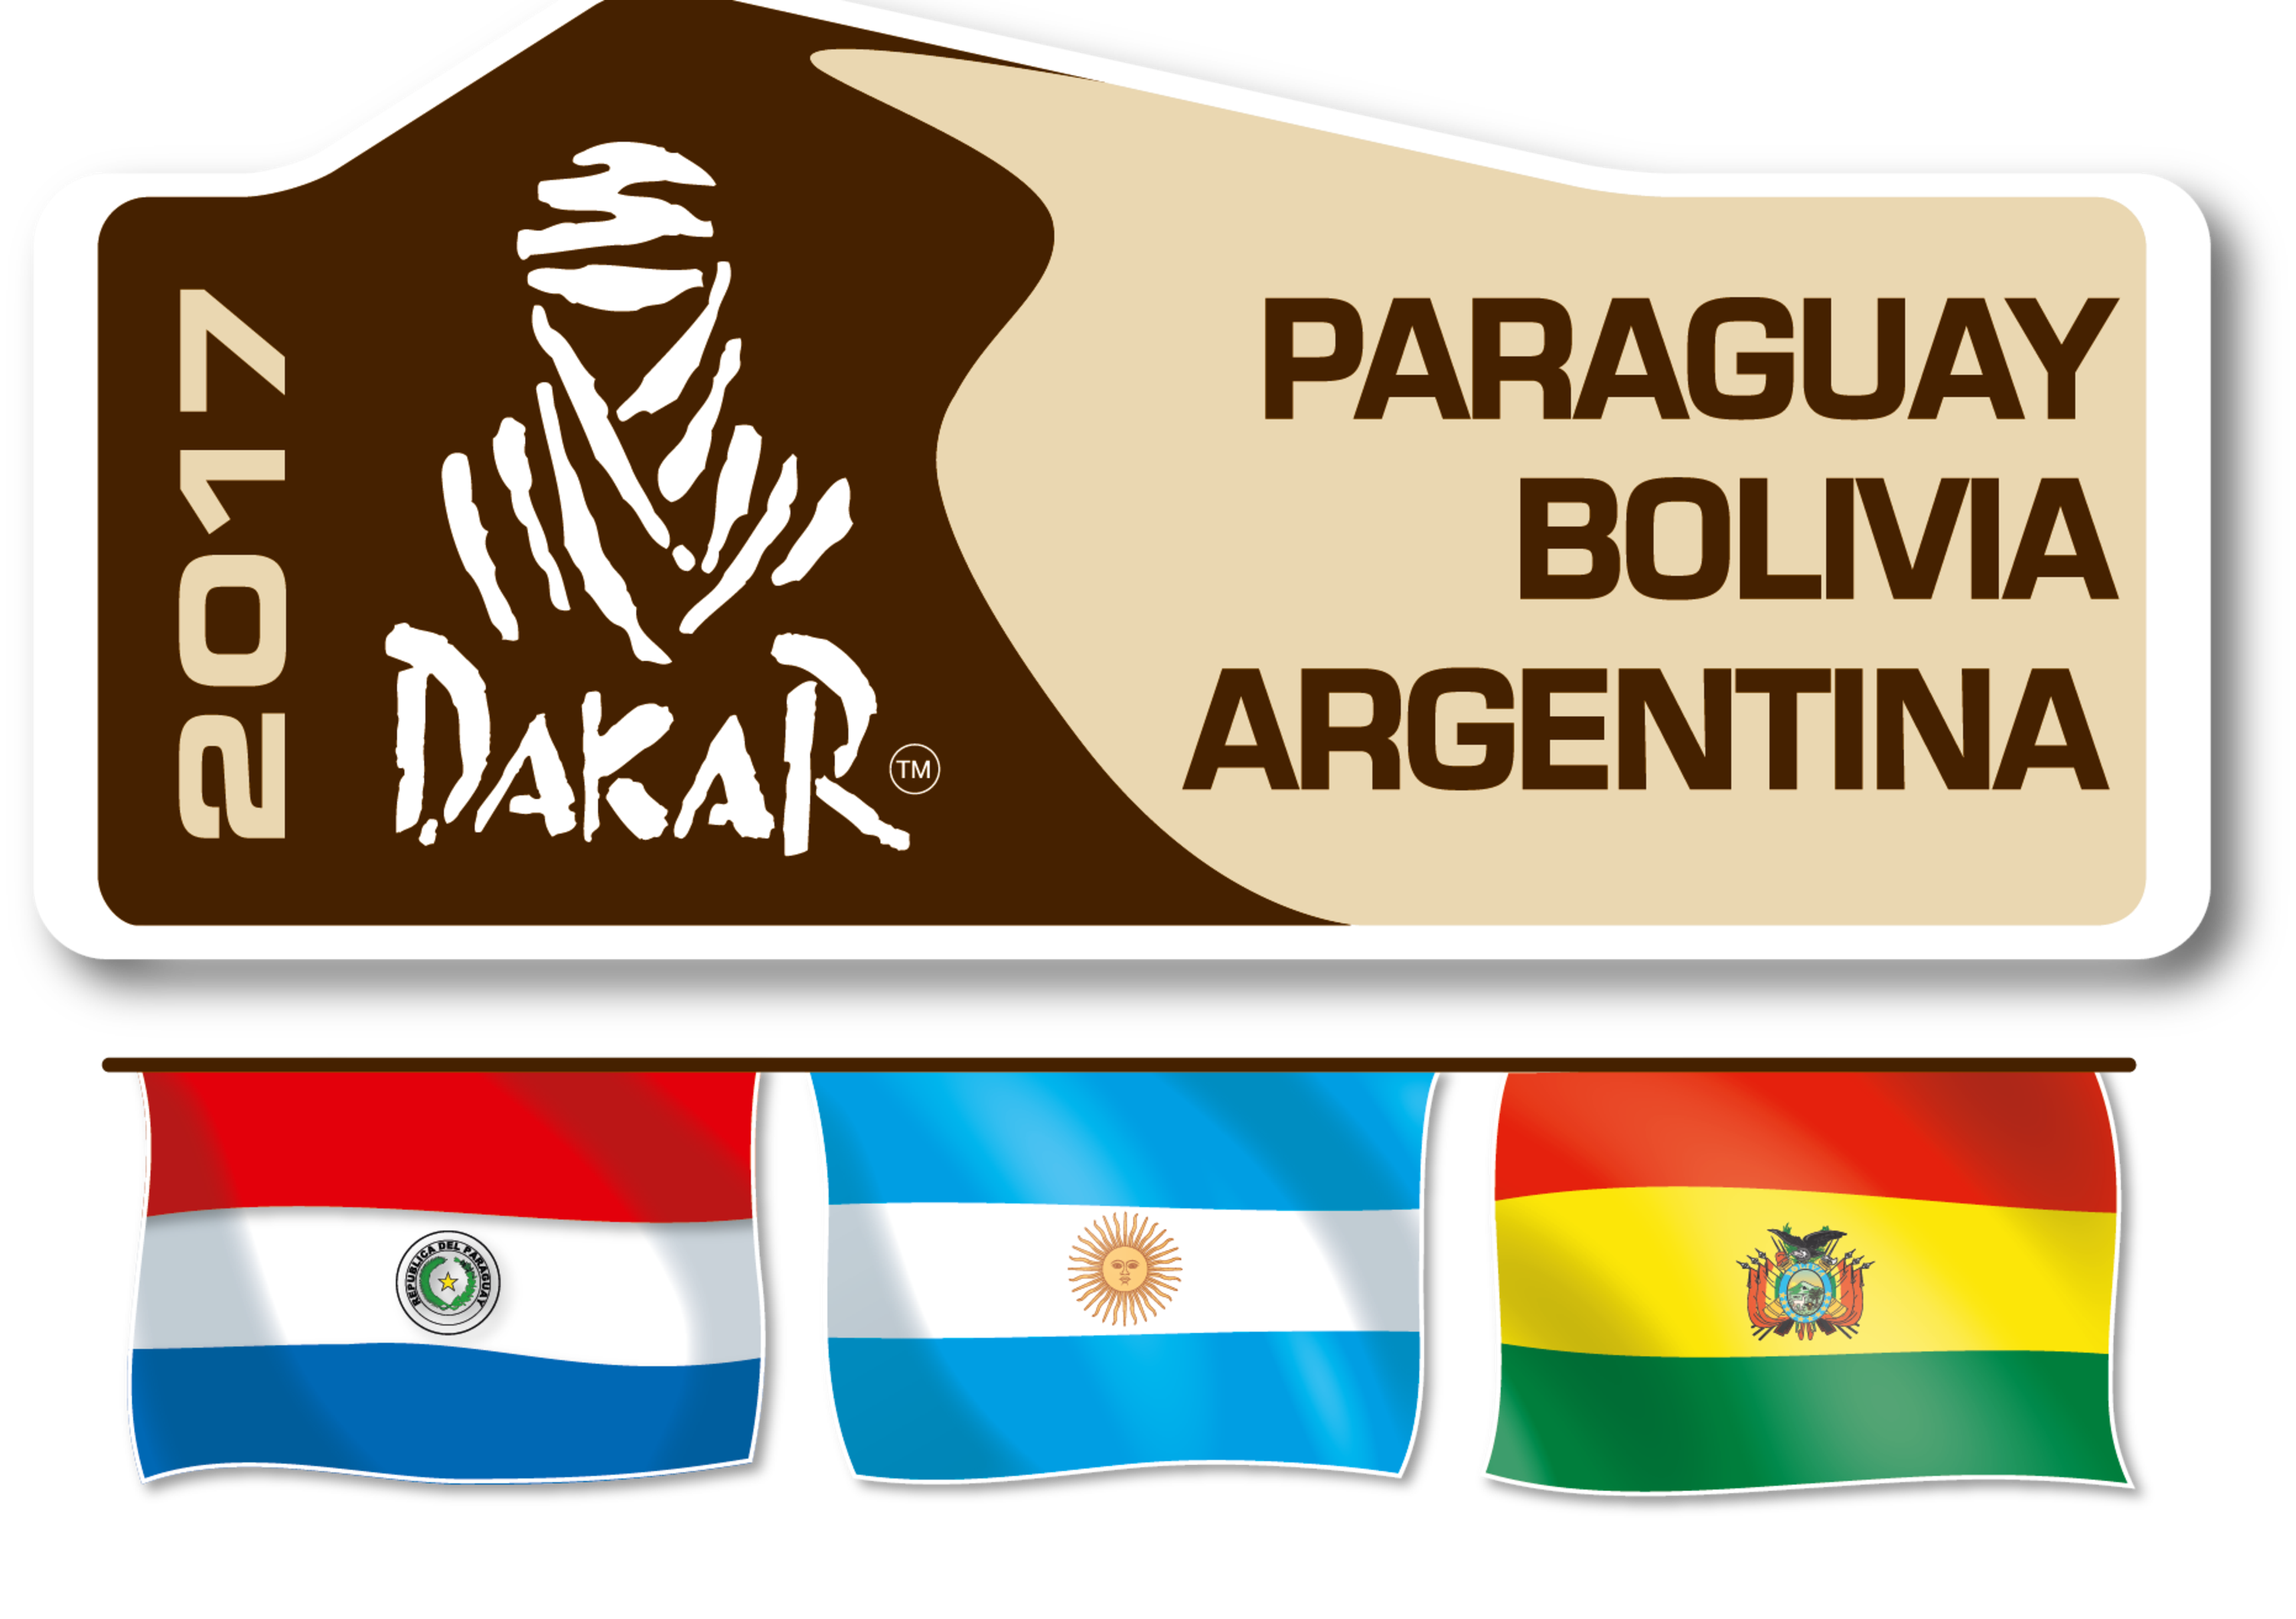 2017. Un Dakar Tropical: Paraguay-Bolivia-Argentina